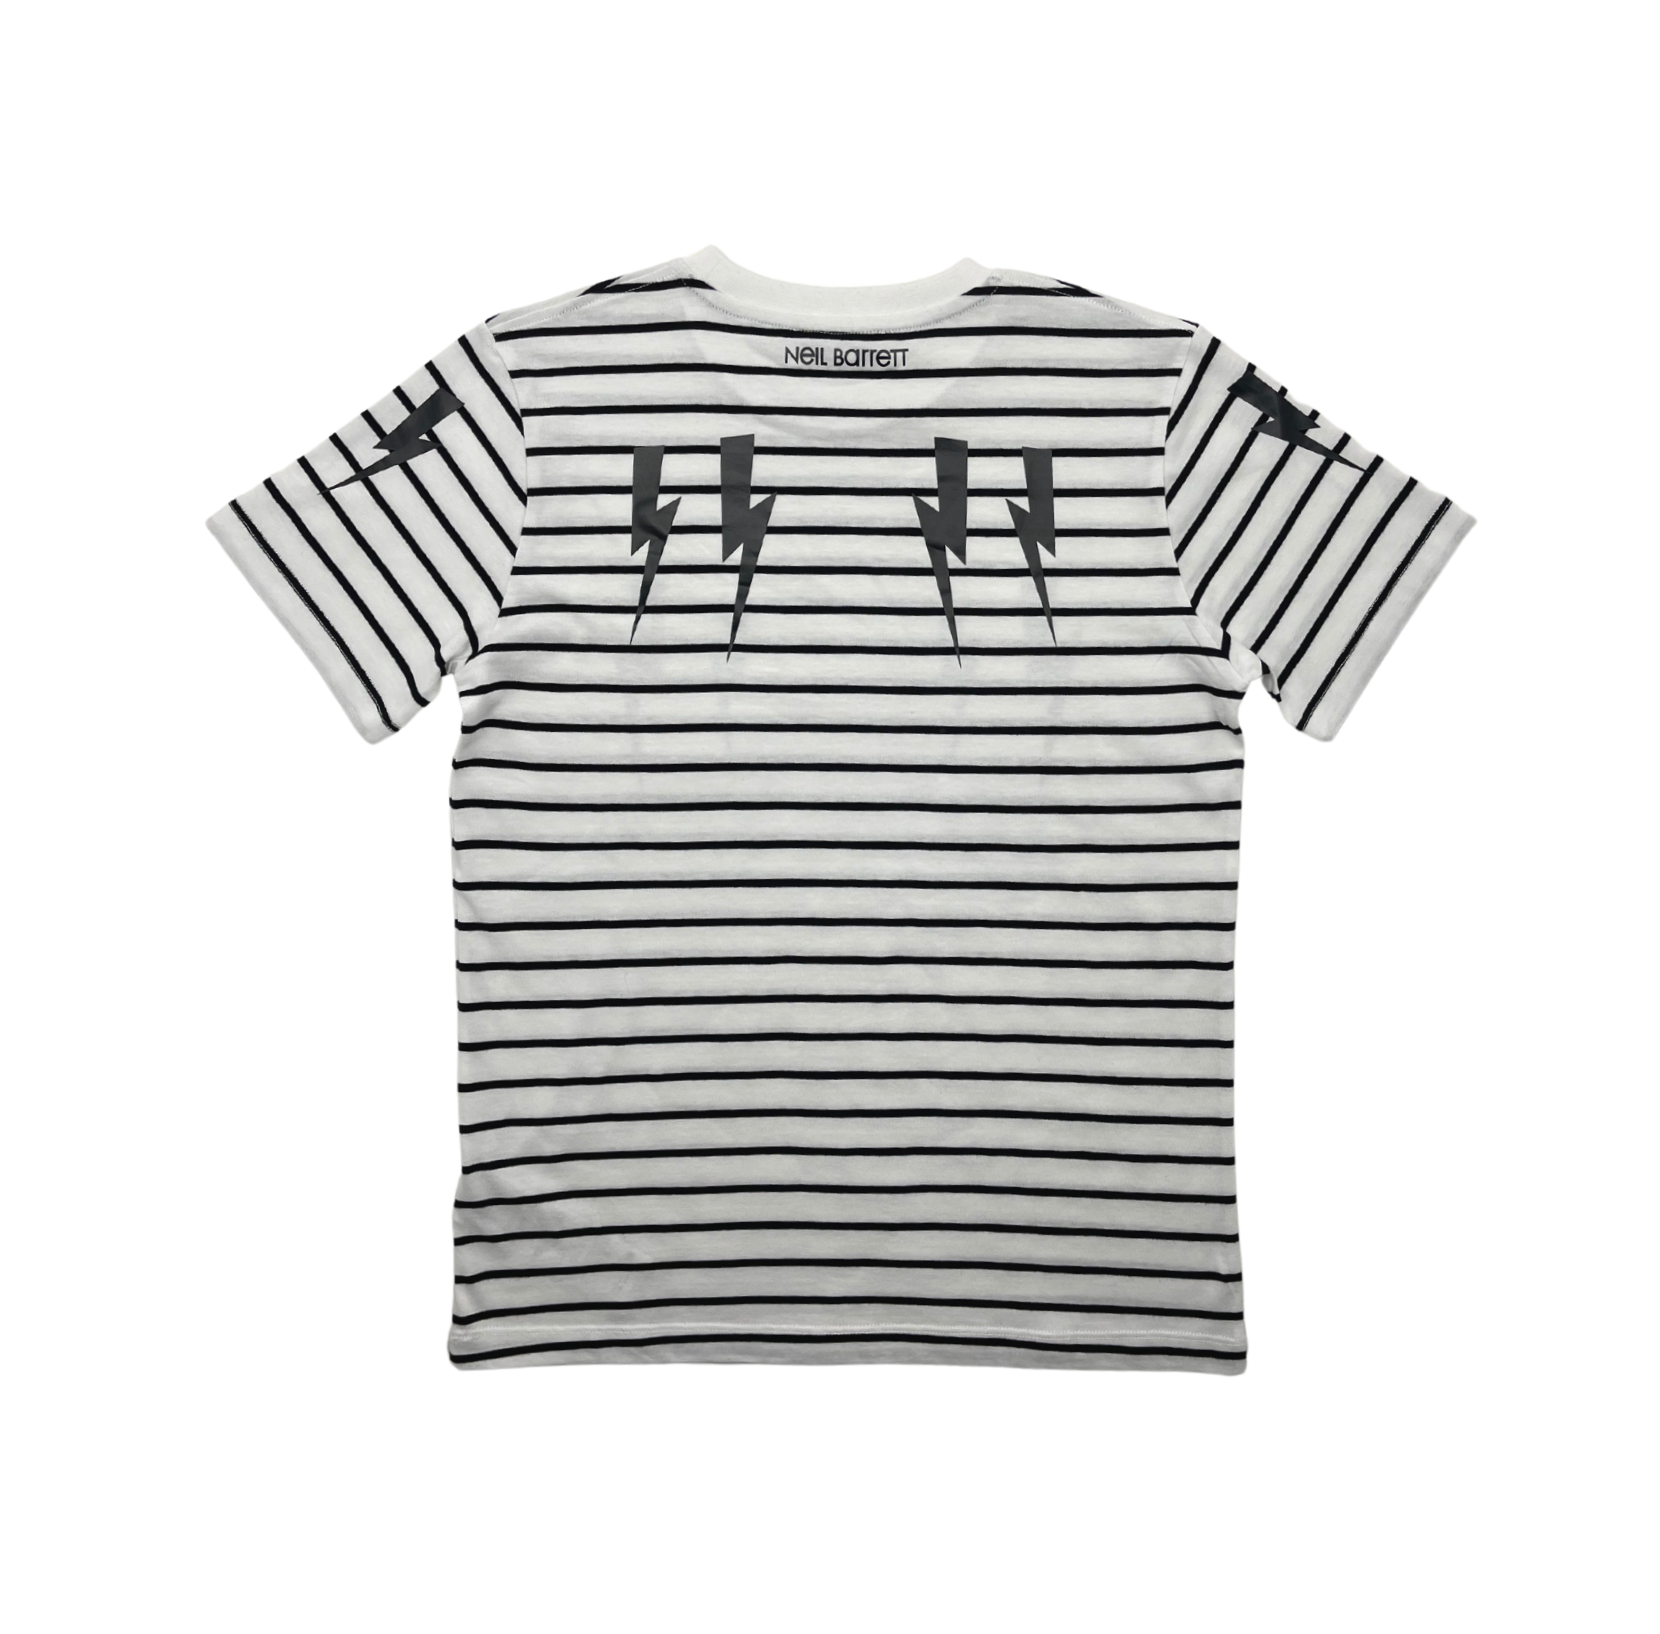 NEIL BARRETT - Striped lightning bolt t-shirt - 10 years old